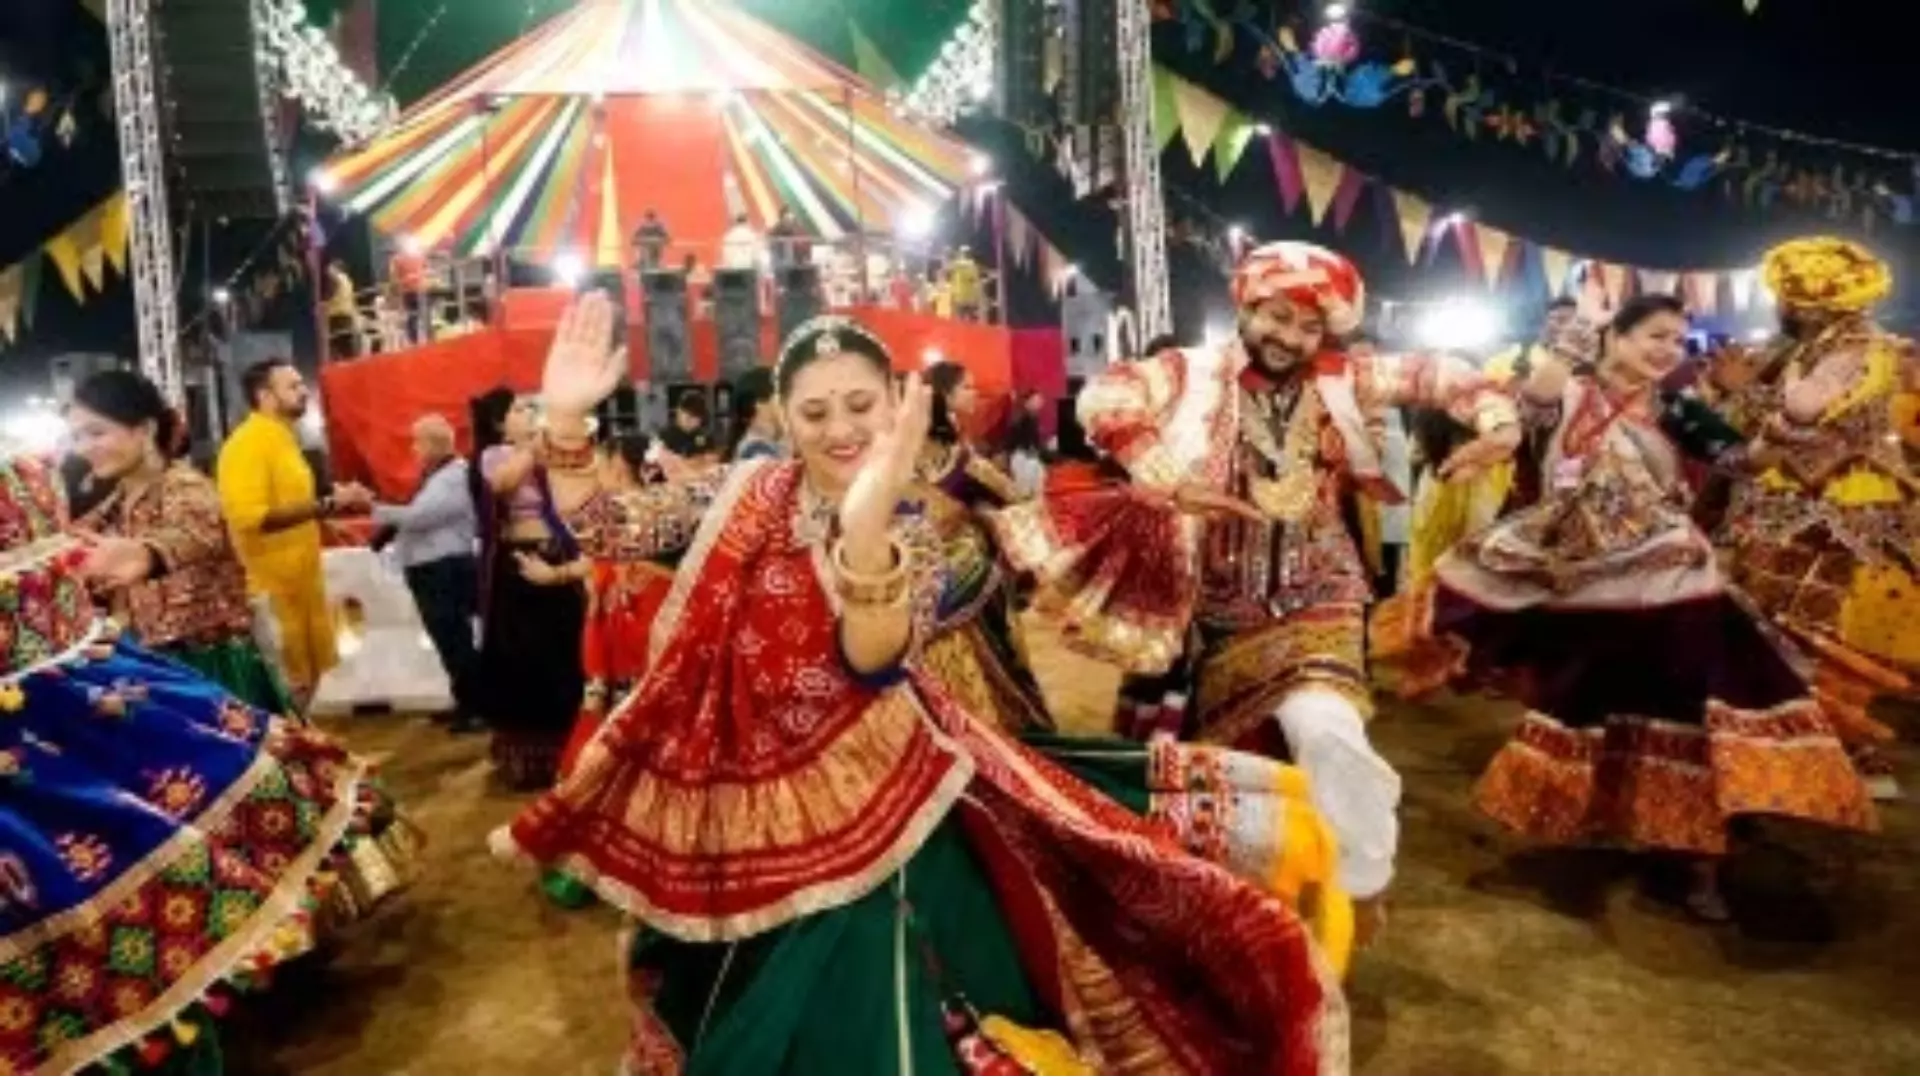 Gujarat’s Garba dance enters UNESCO’s list of ‘intangible cultural heritage’